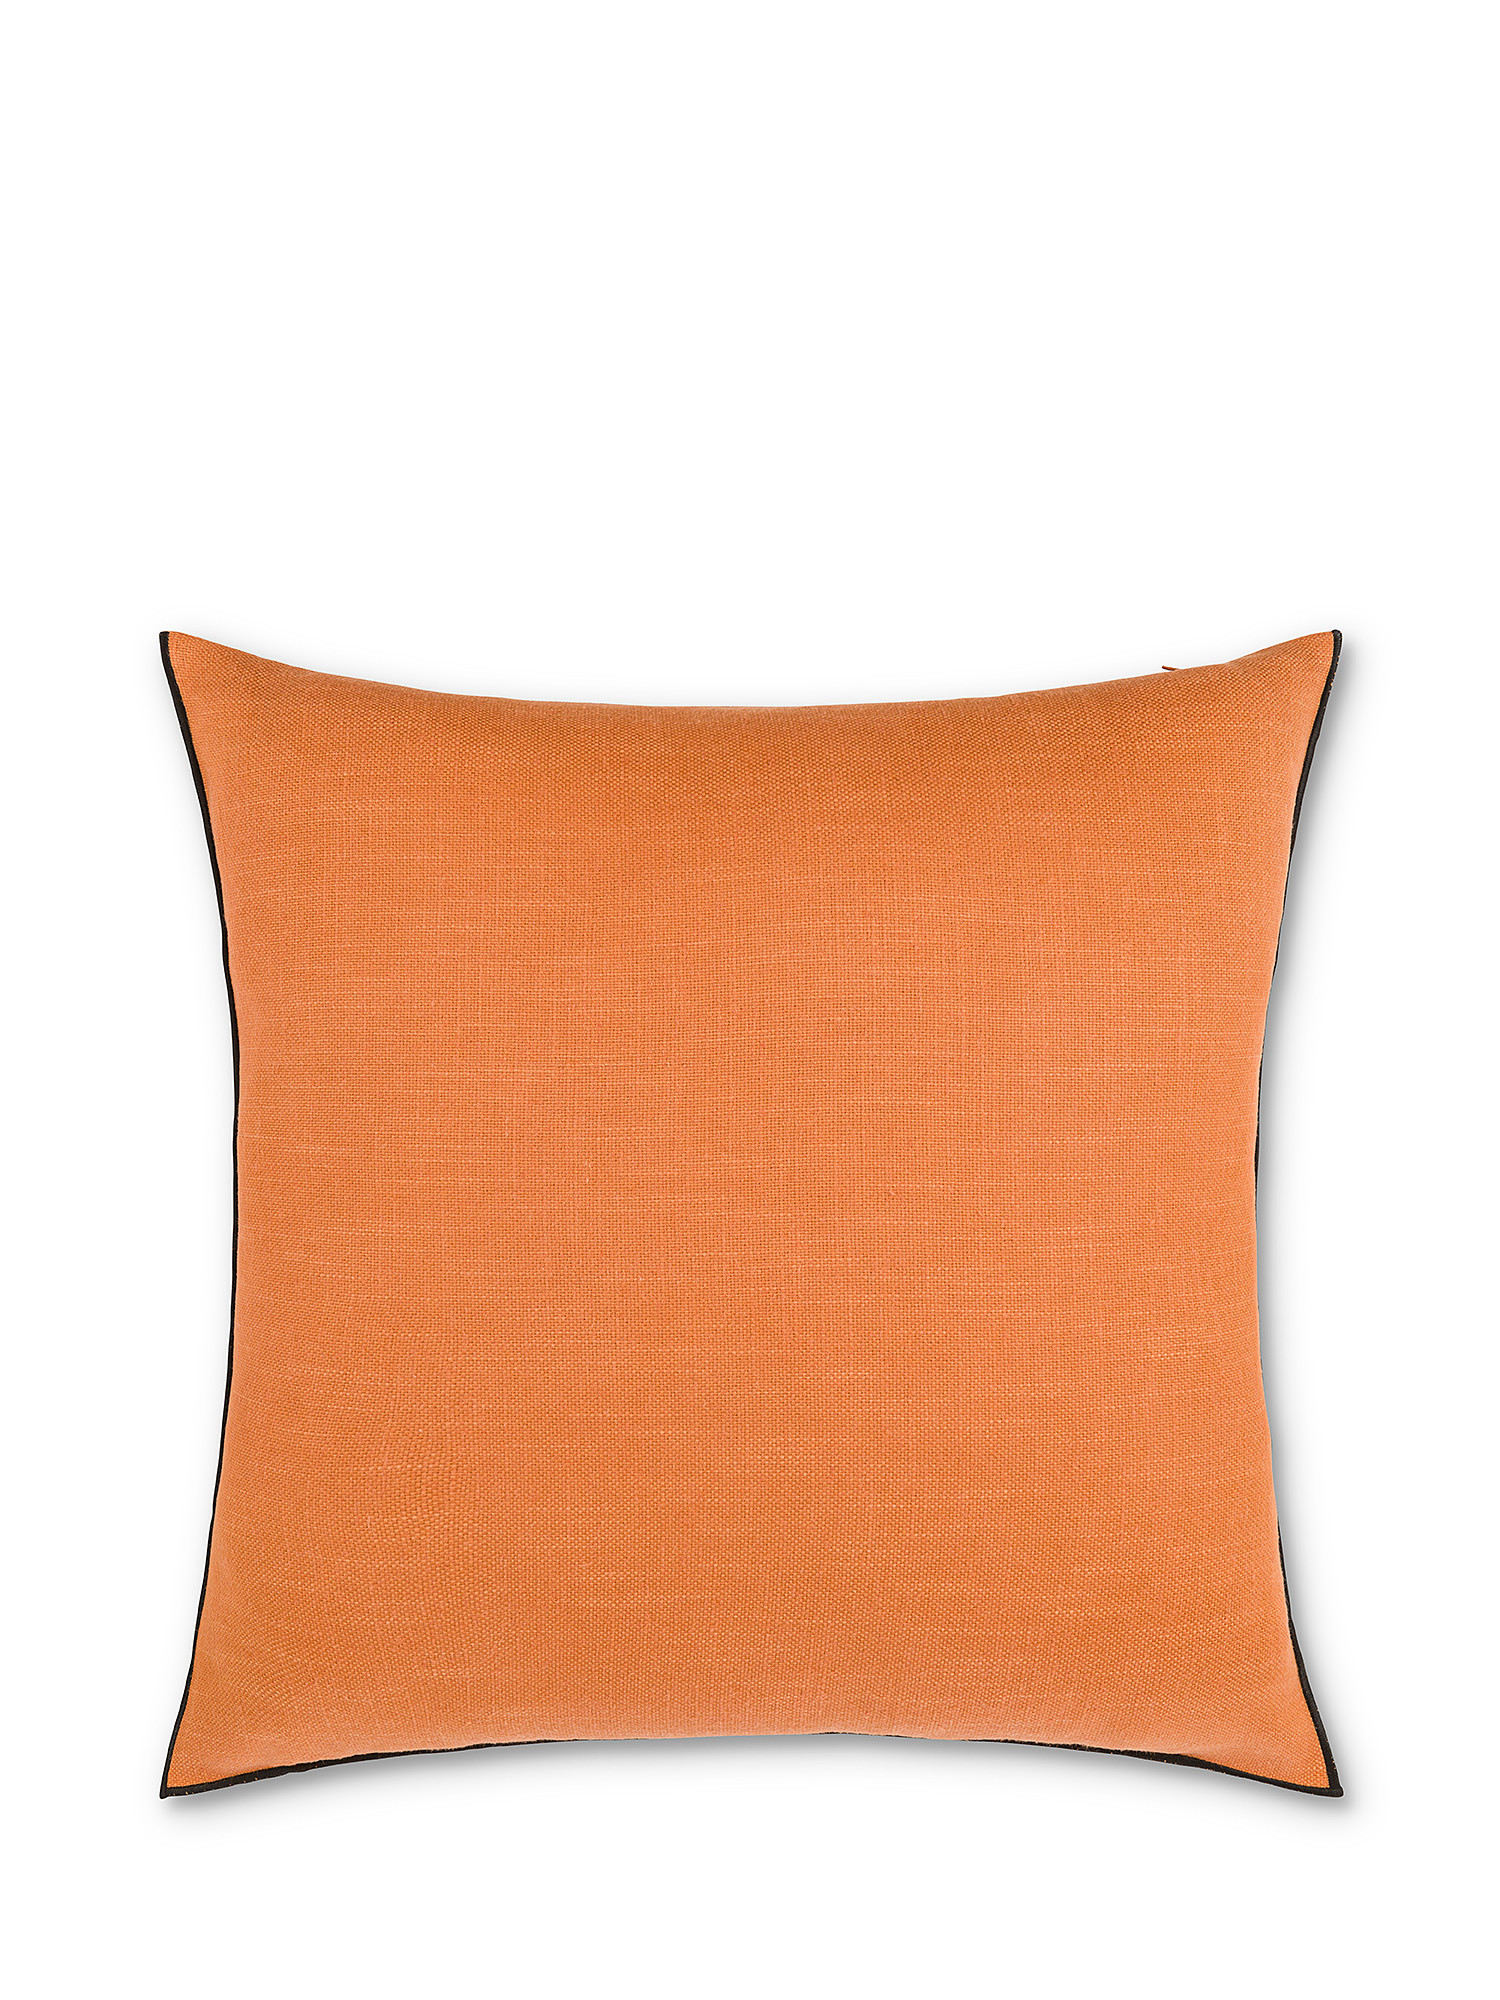 Cuscino tessuto tinta unita 50x50cm, Arancione chiaro, large image number 0